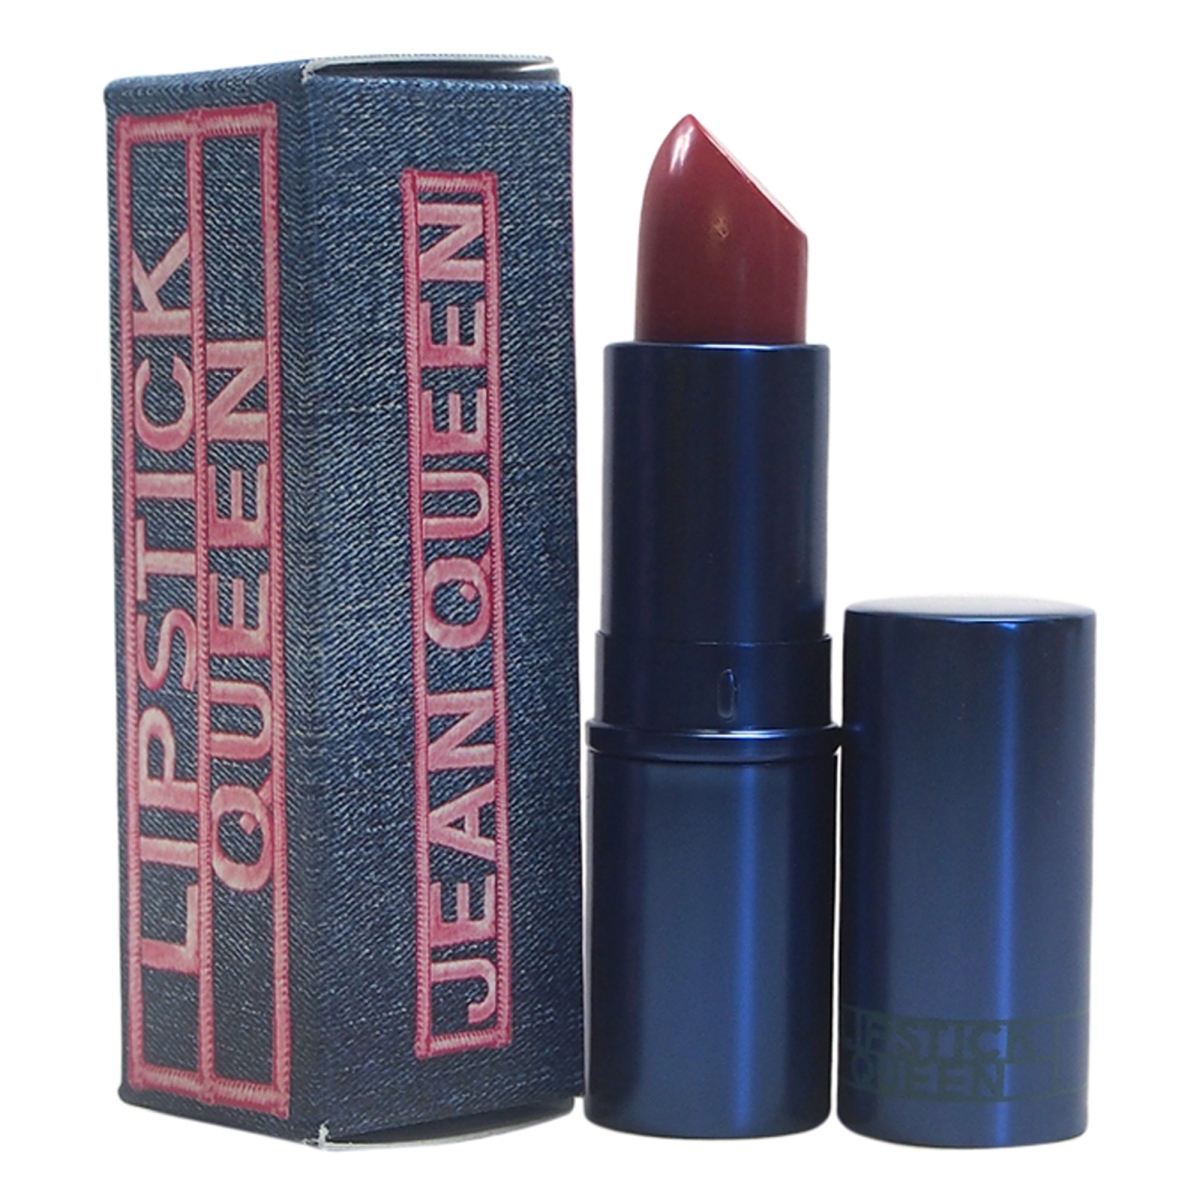 W-c-6669 0.12 Oz Jean Queen Lipstick For Women